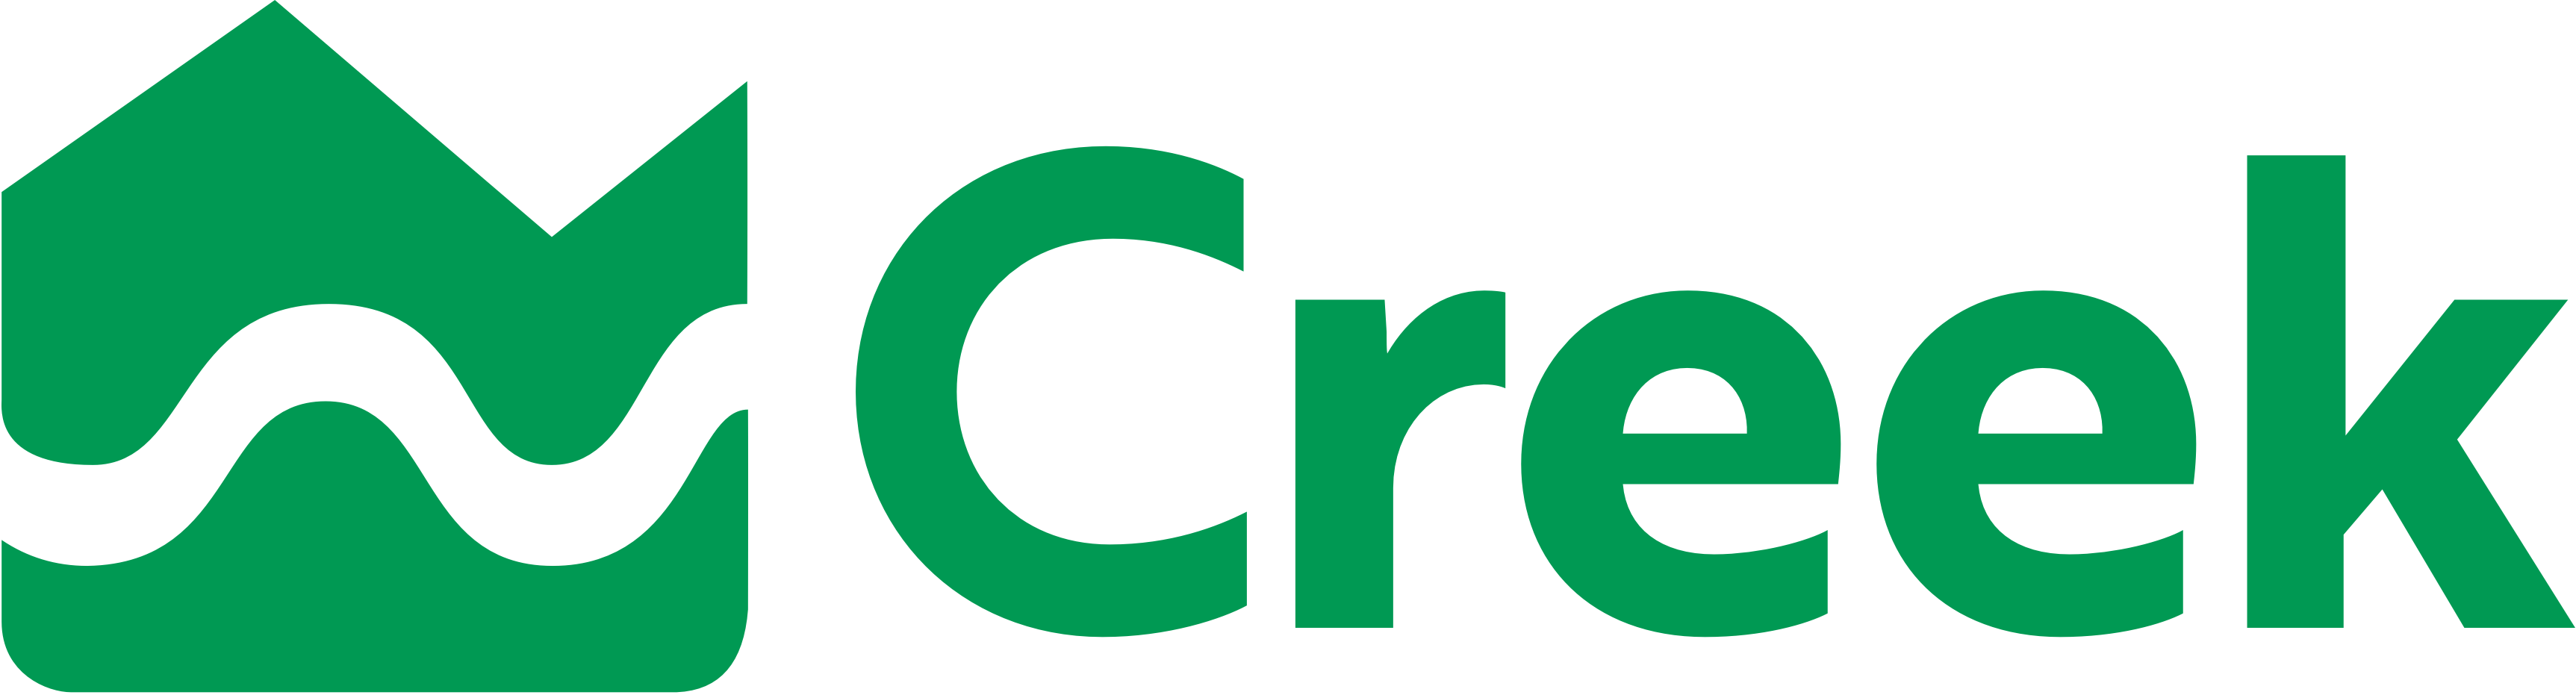 creek-logo